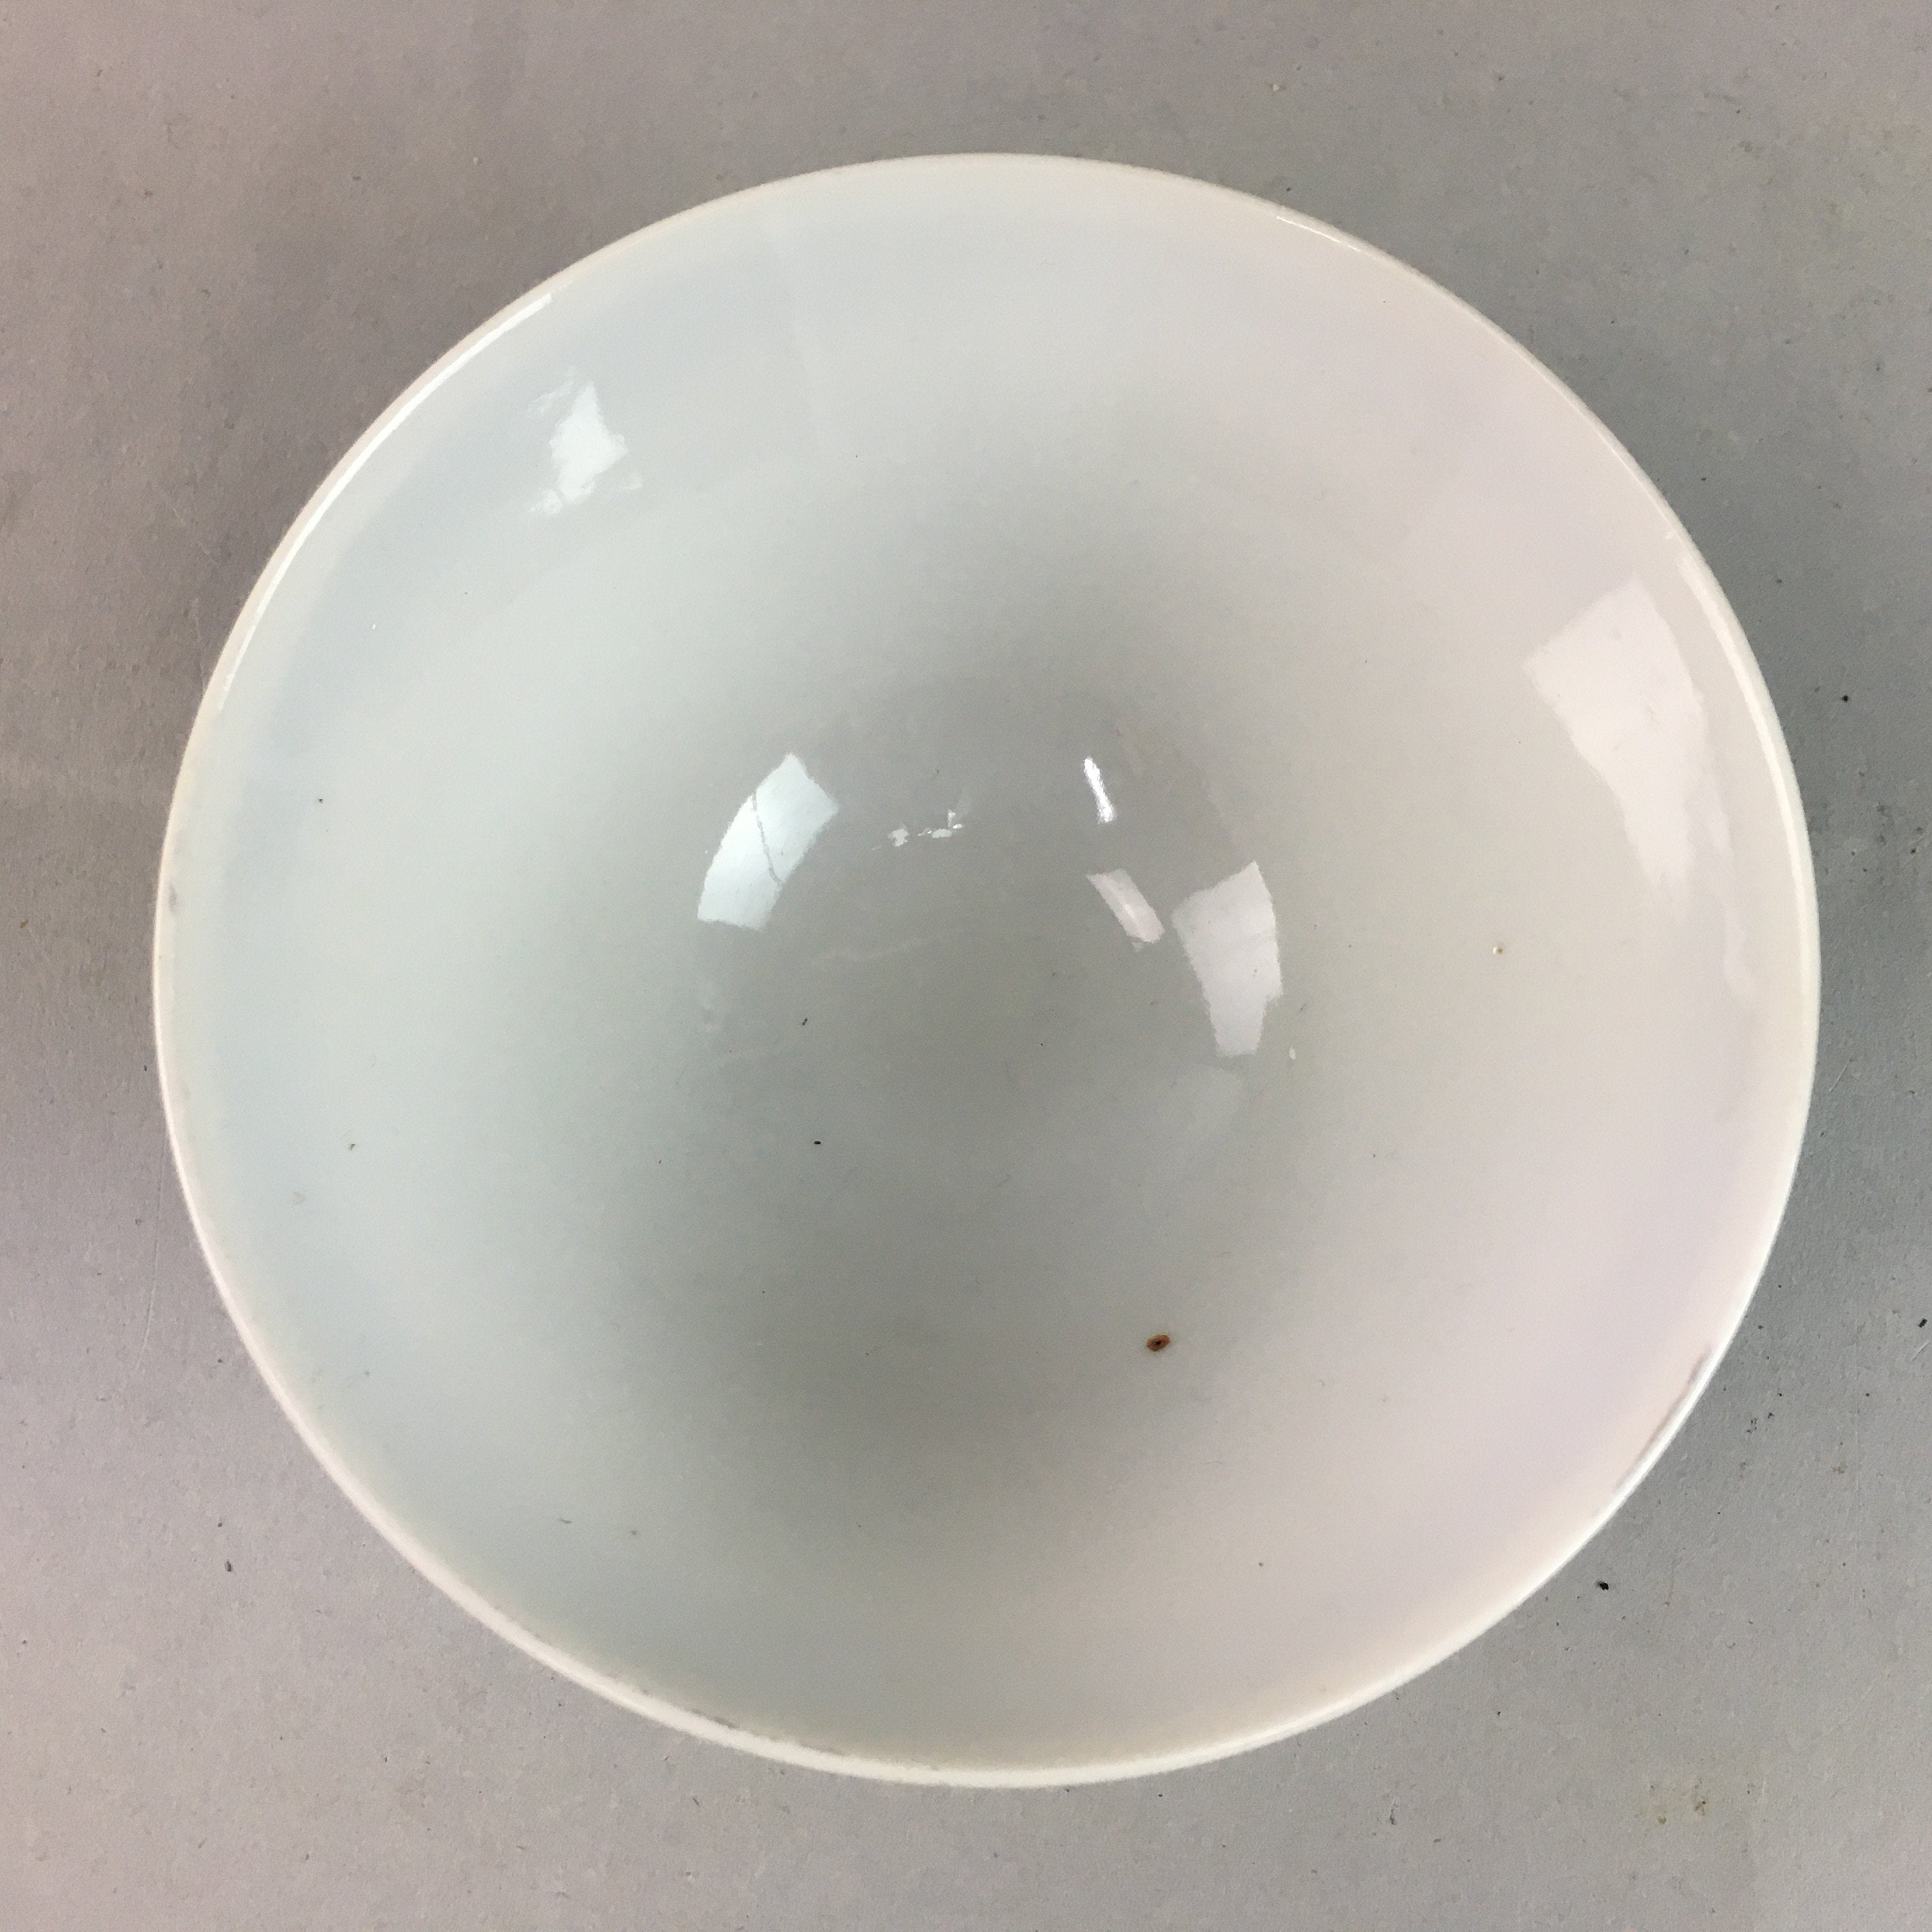 Japanese Porcelain Rice Bowl Vtg Kanji Green Gold Chawan PP177